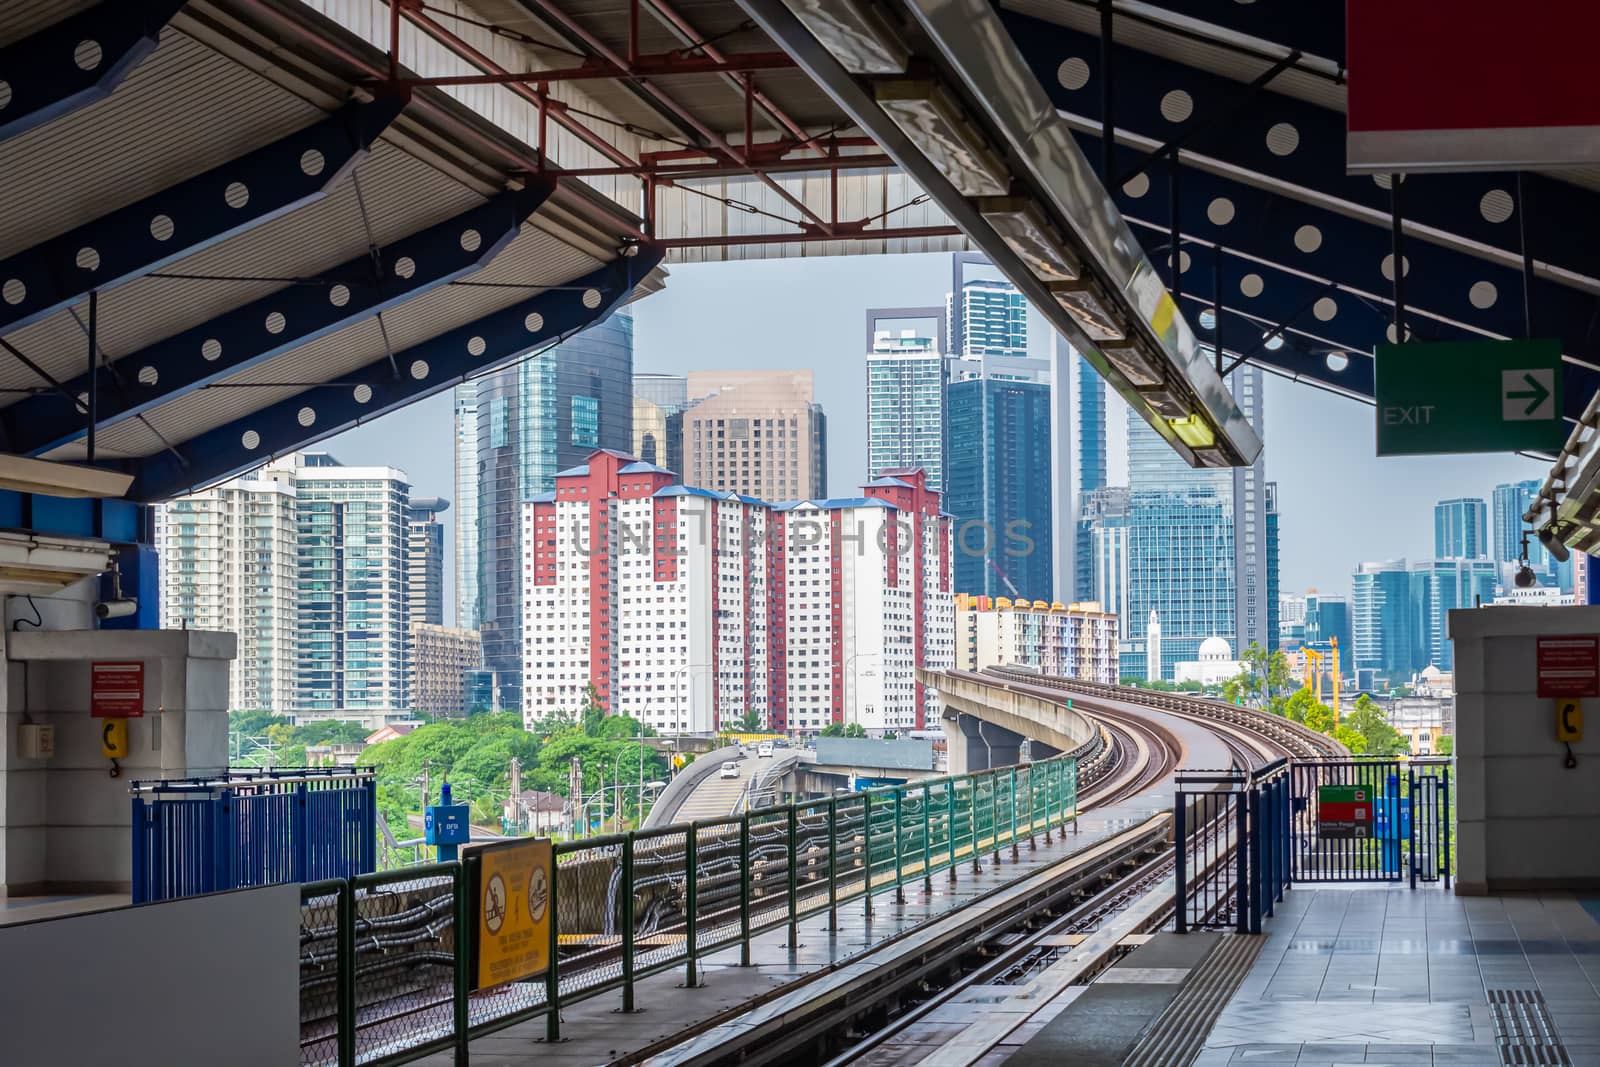 Tramway station in Kuala Lumpur showing skyline of city center